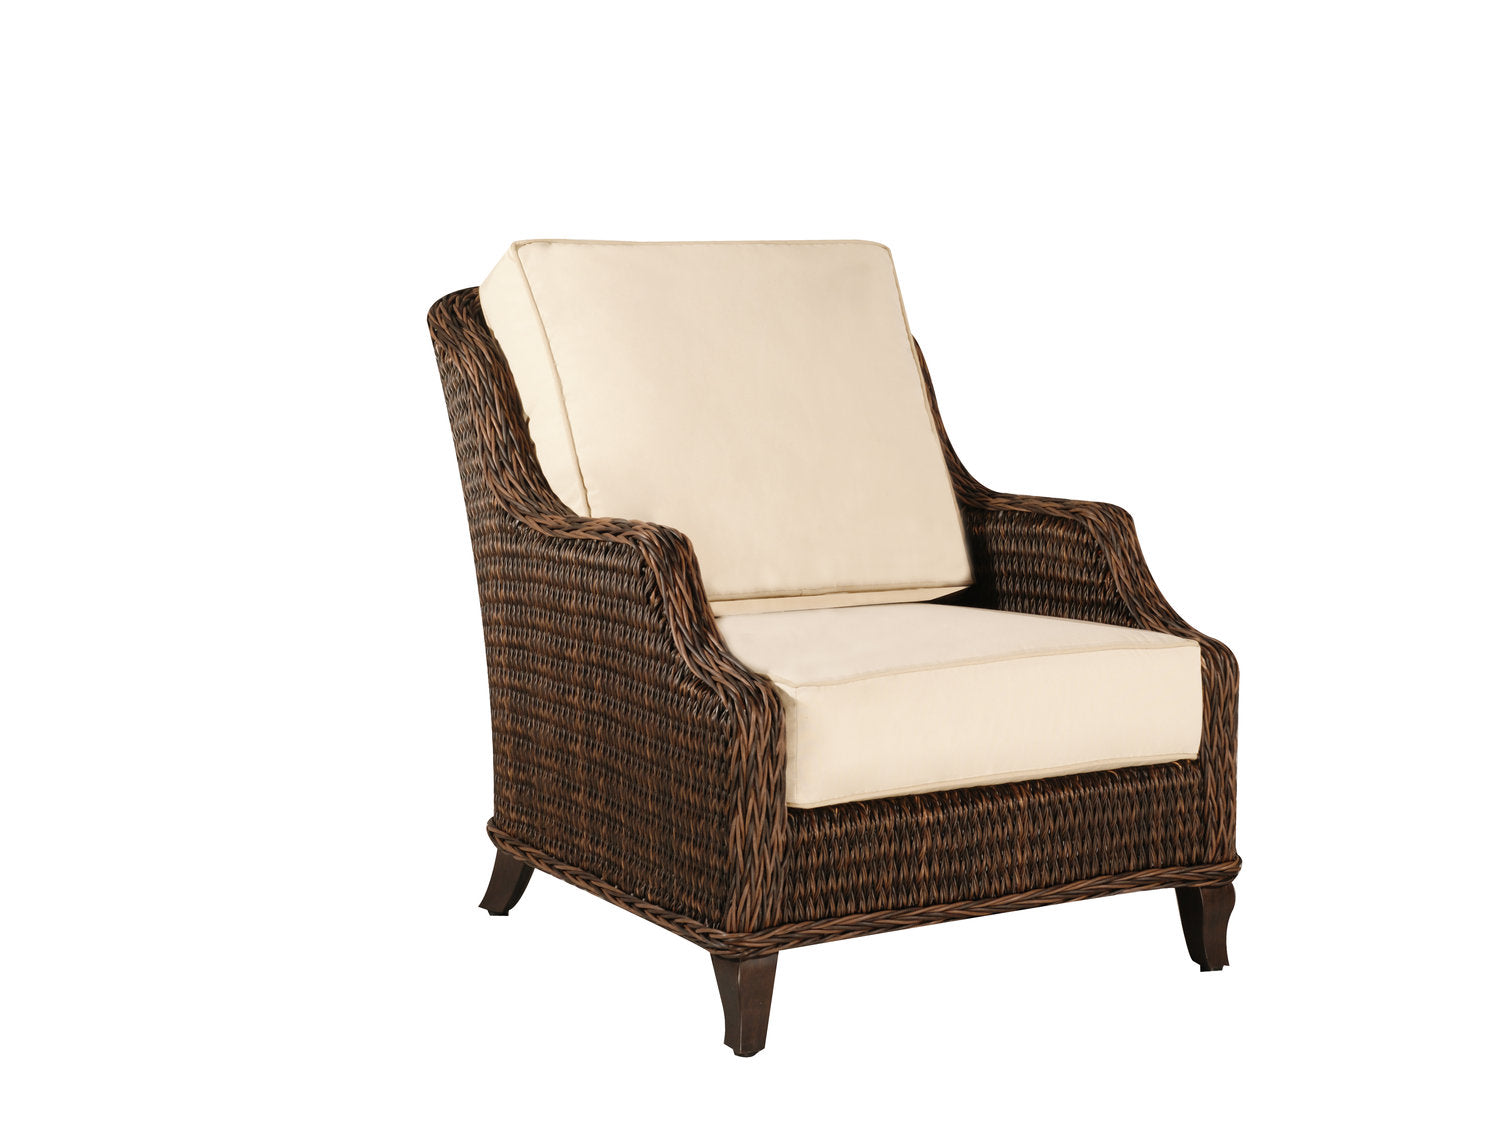 Monticello Lounge Chair By Patio Renaissance